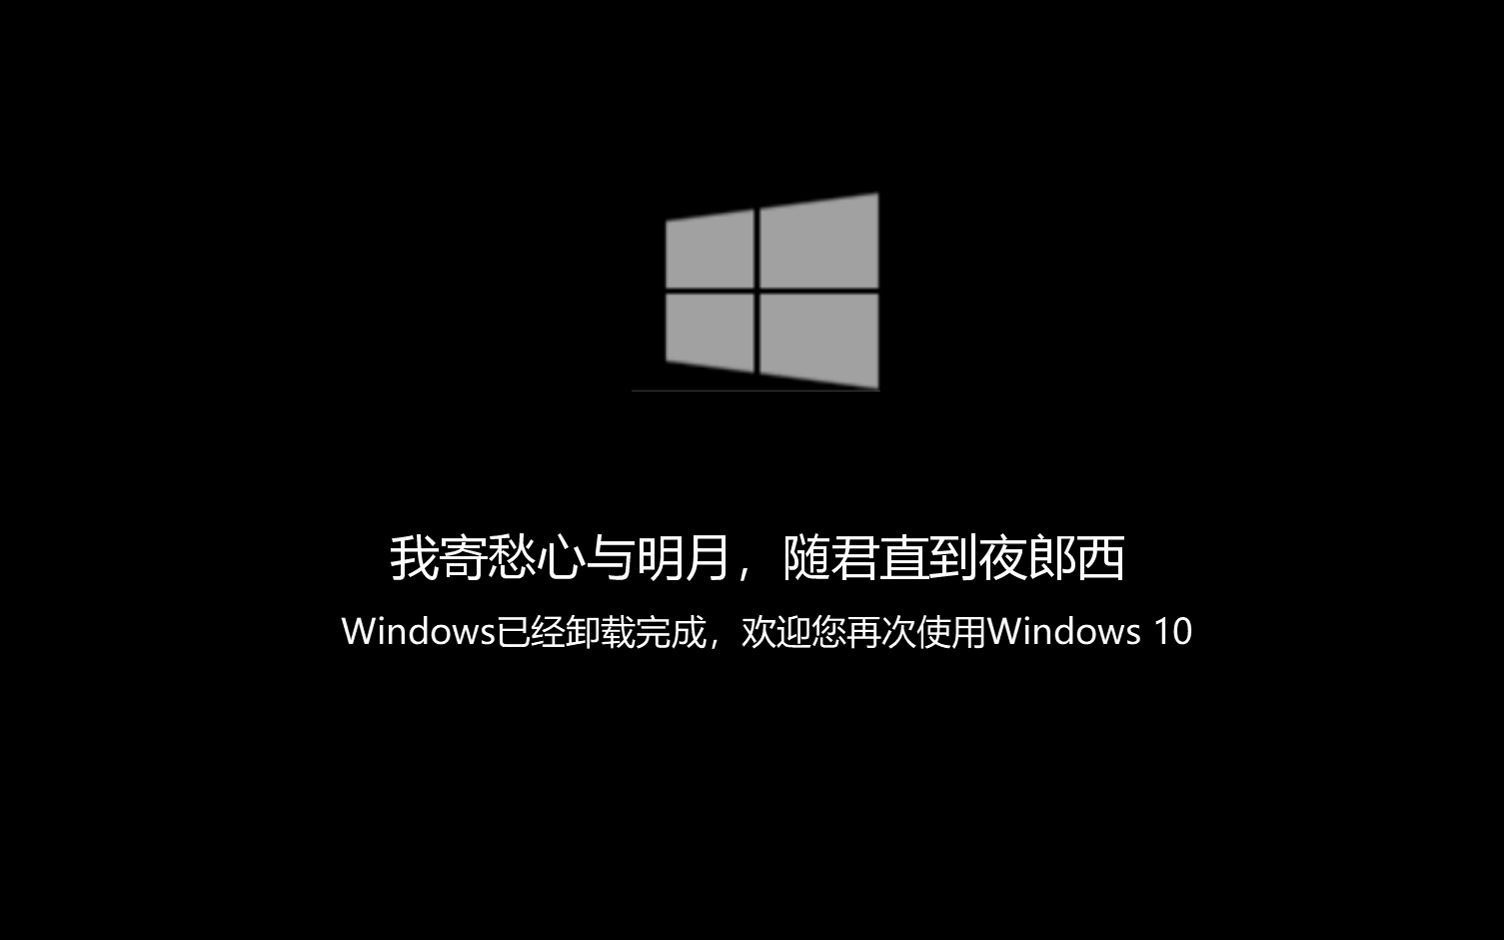 Windows 10可以卸载了？